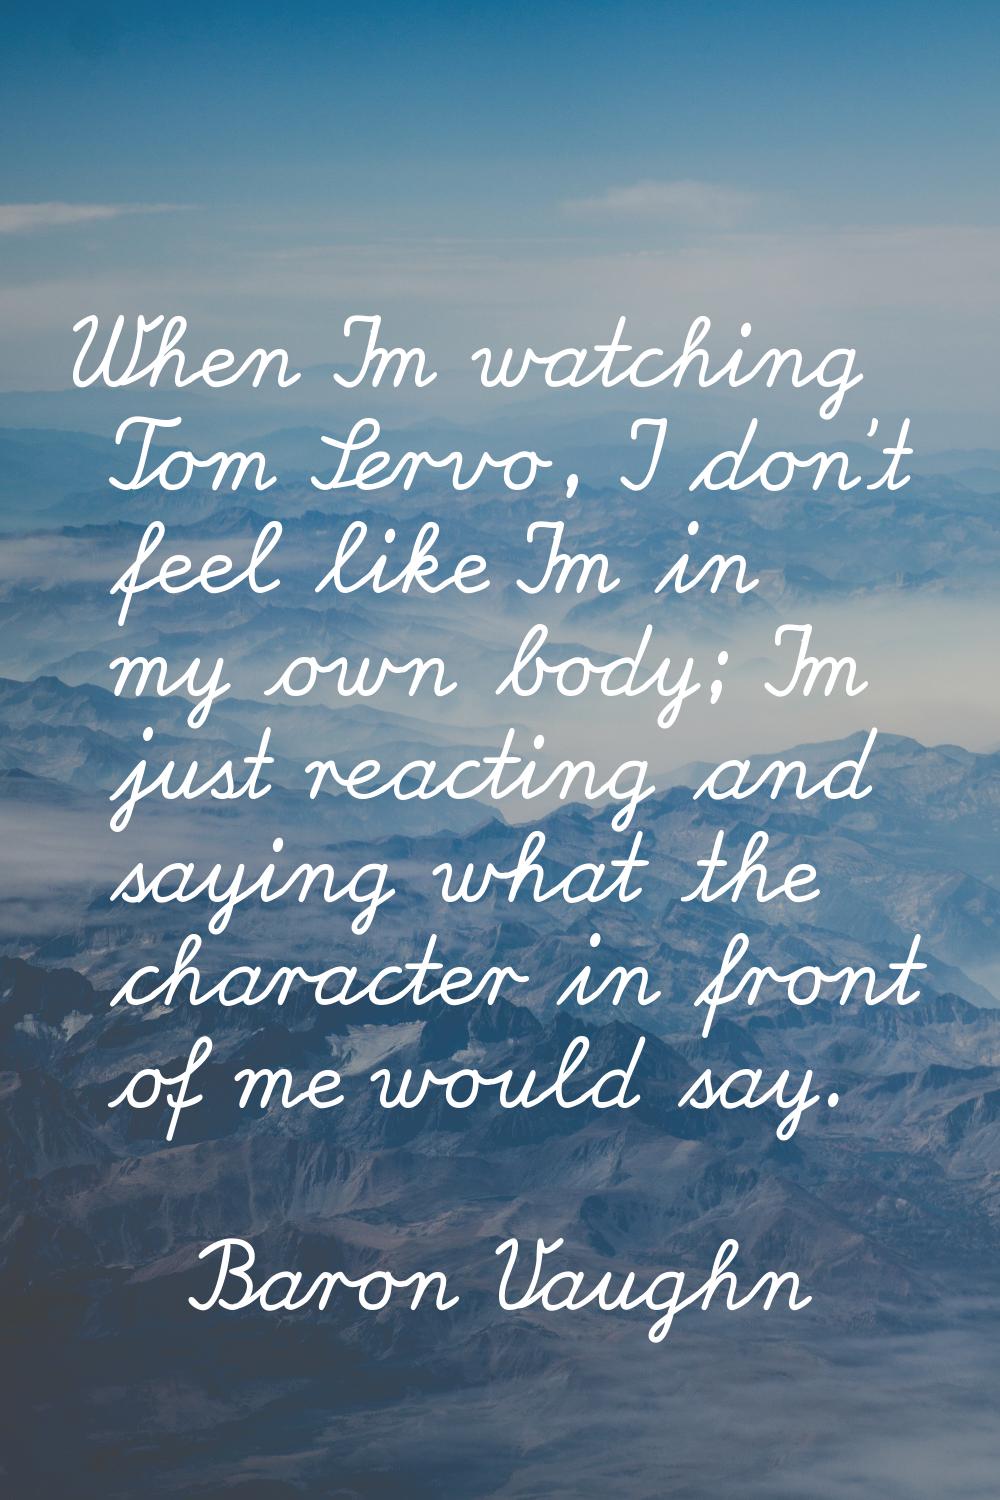 When I'm watching Tom Servo, I don't feel like I'm in my own body; I'm just reacting and saying wha